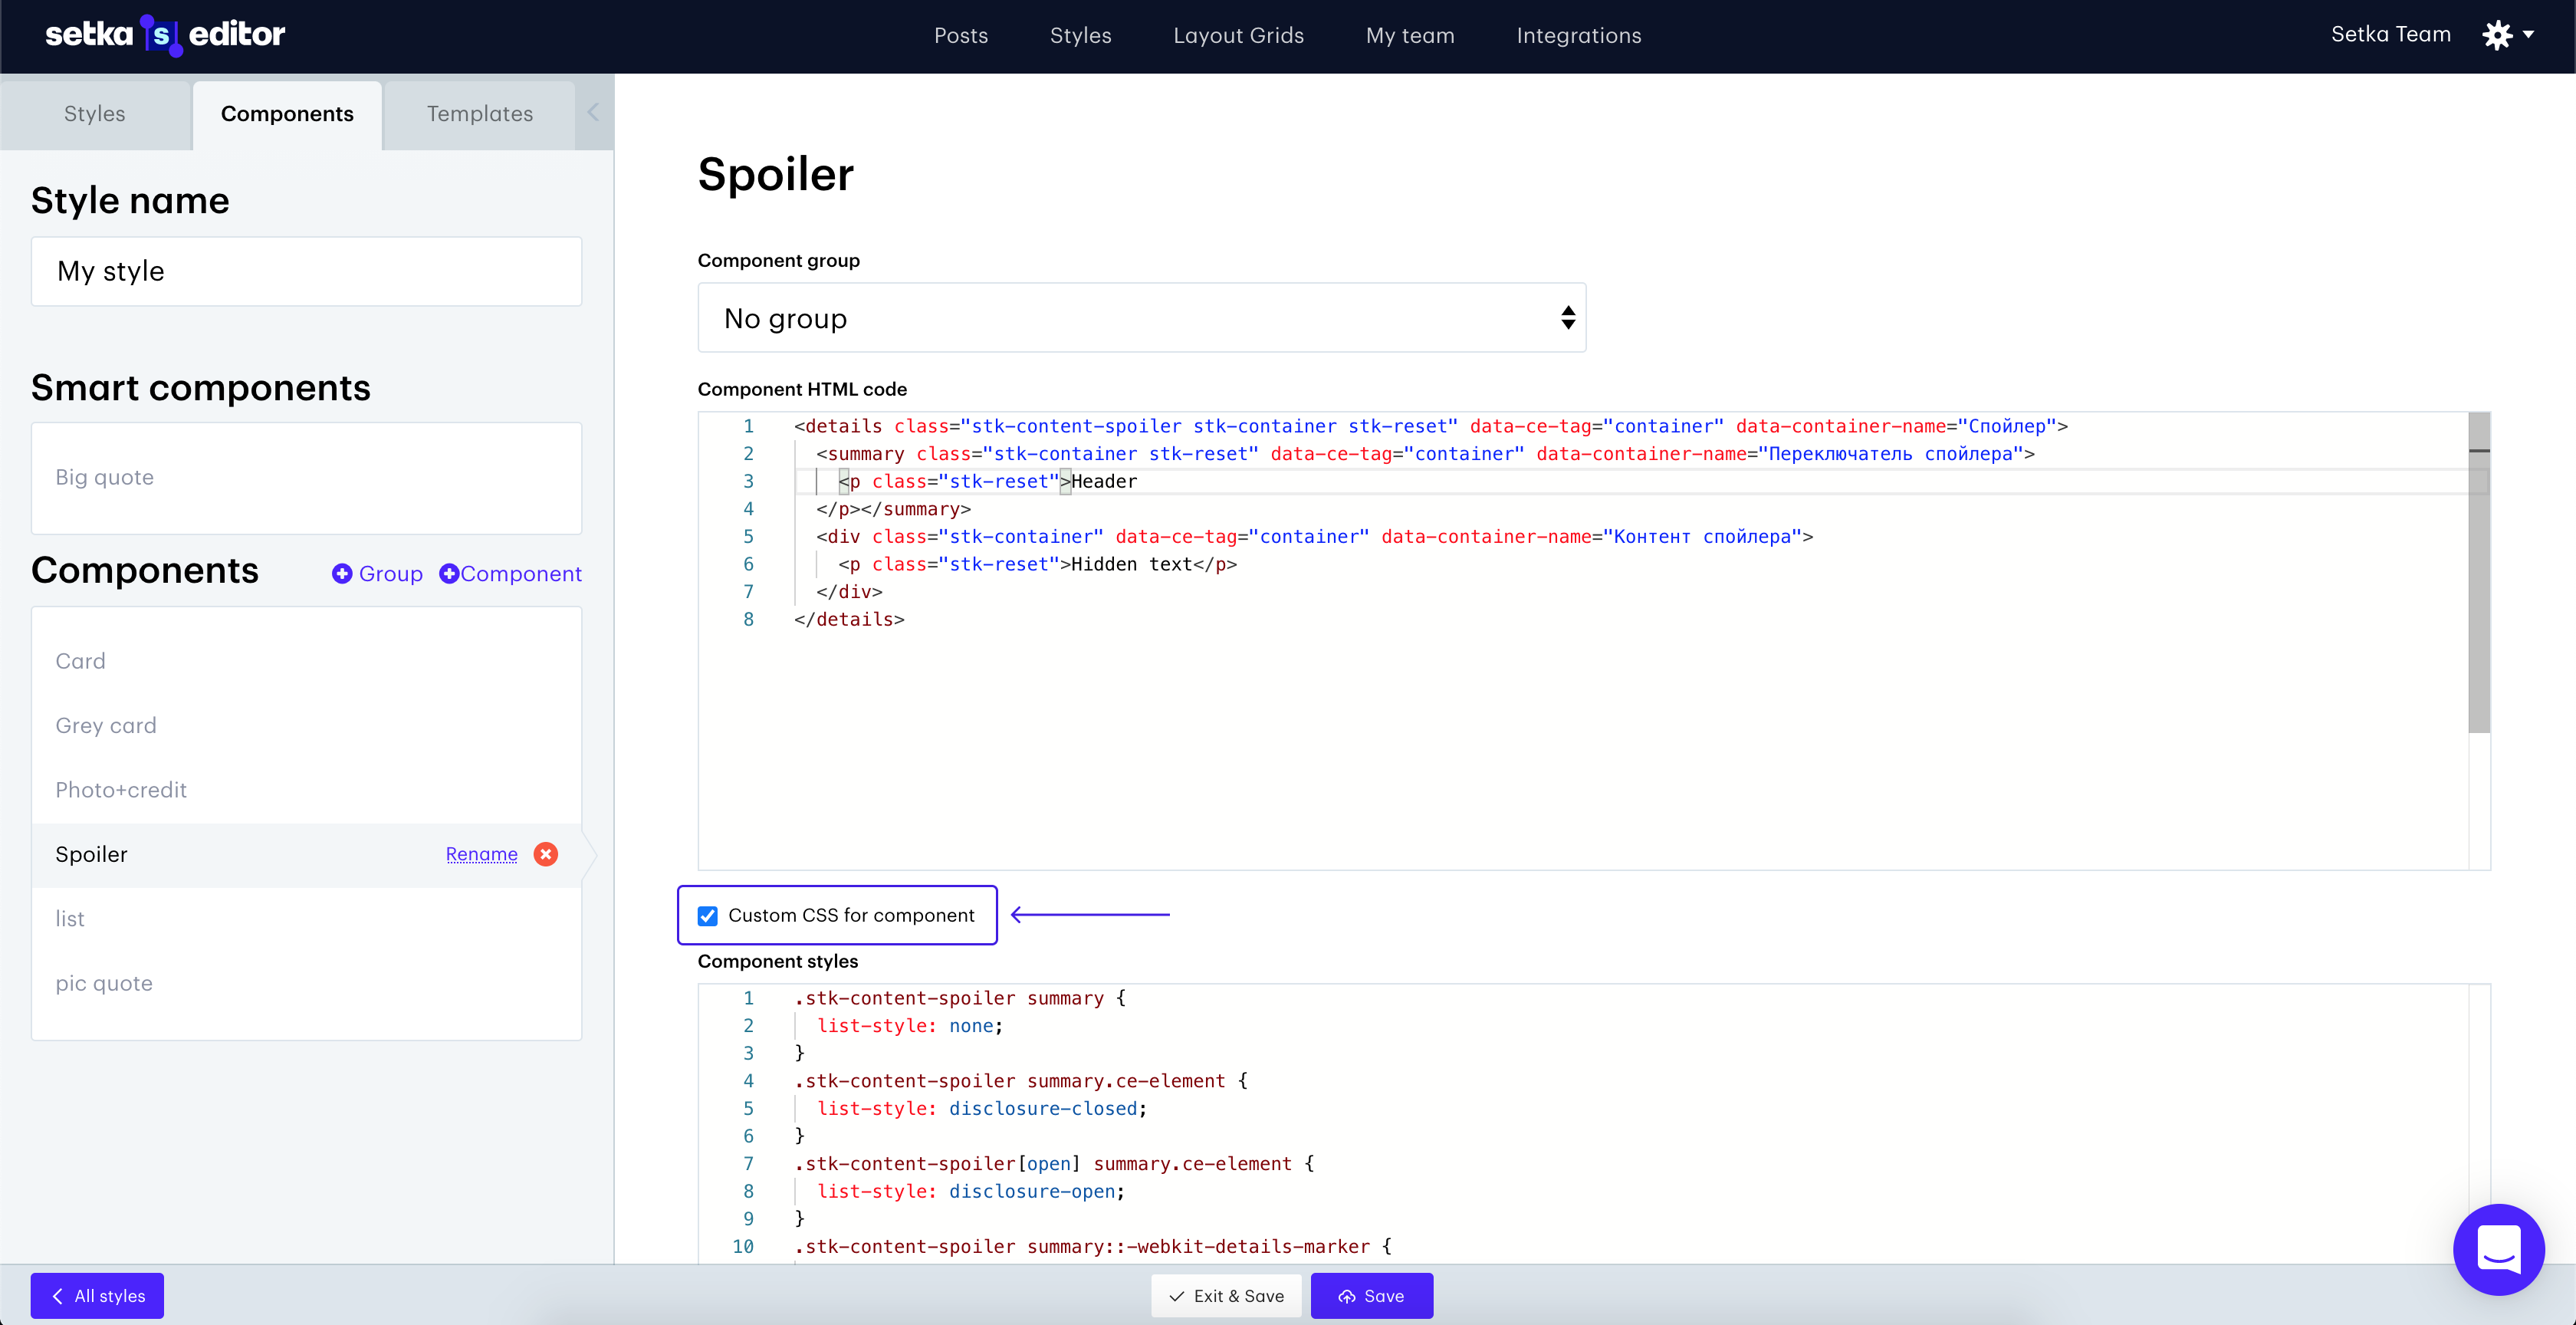 Screenshot-Setka-Editor-Style-Components-Edit-Custom-CSS.png